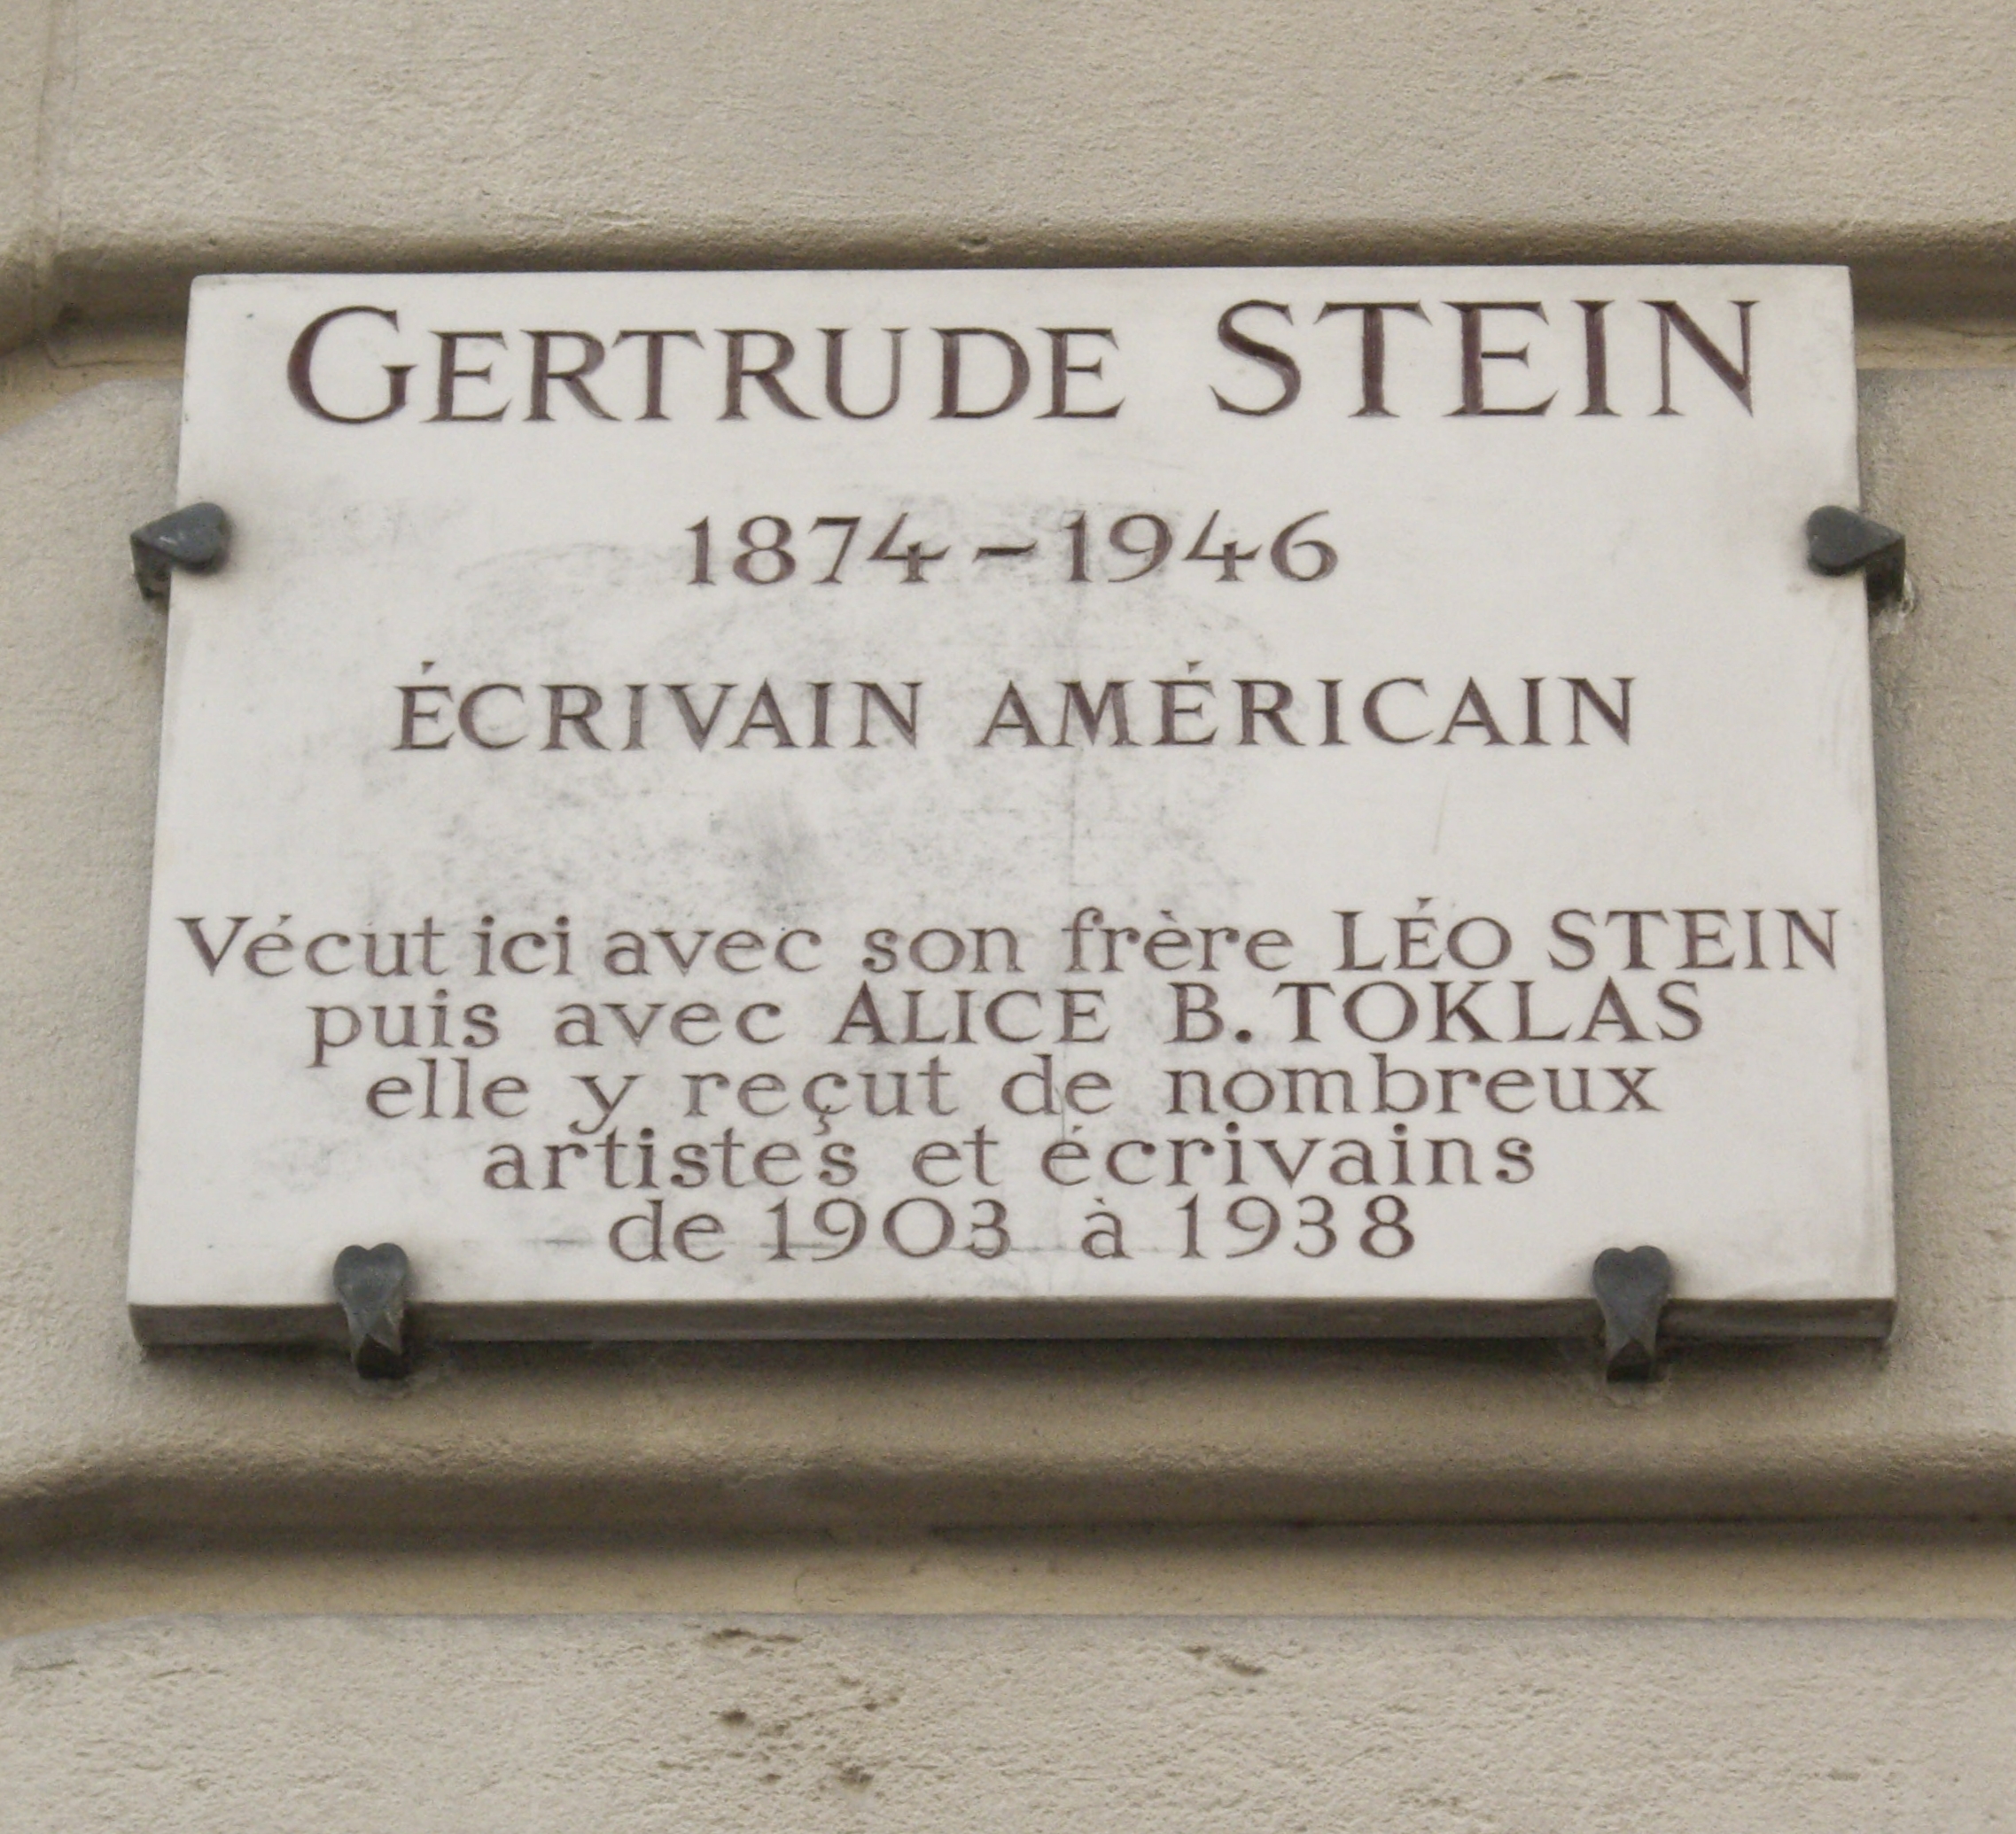 Plaque Gertrude Stein, 27 rue de Fleurus, Paris 6.jpg